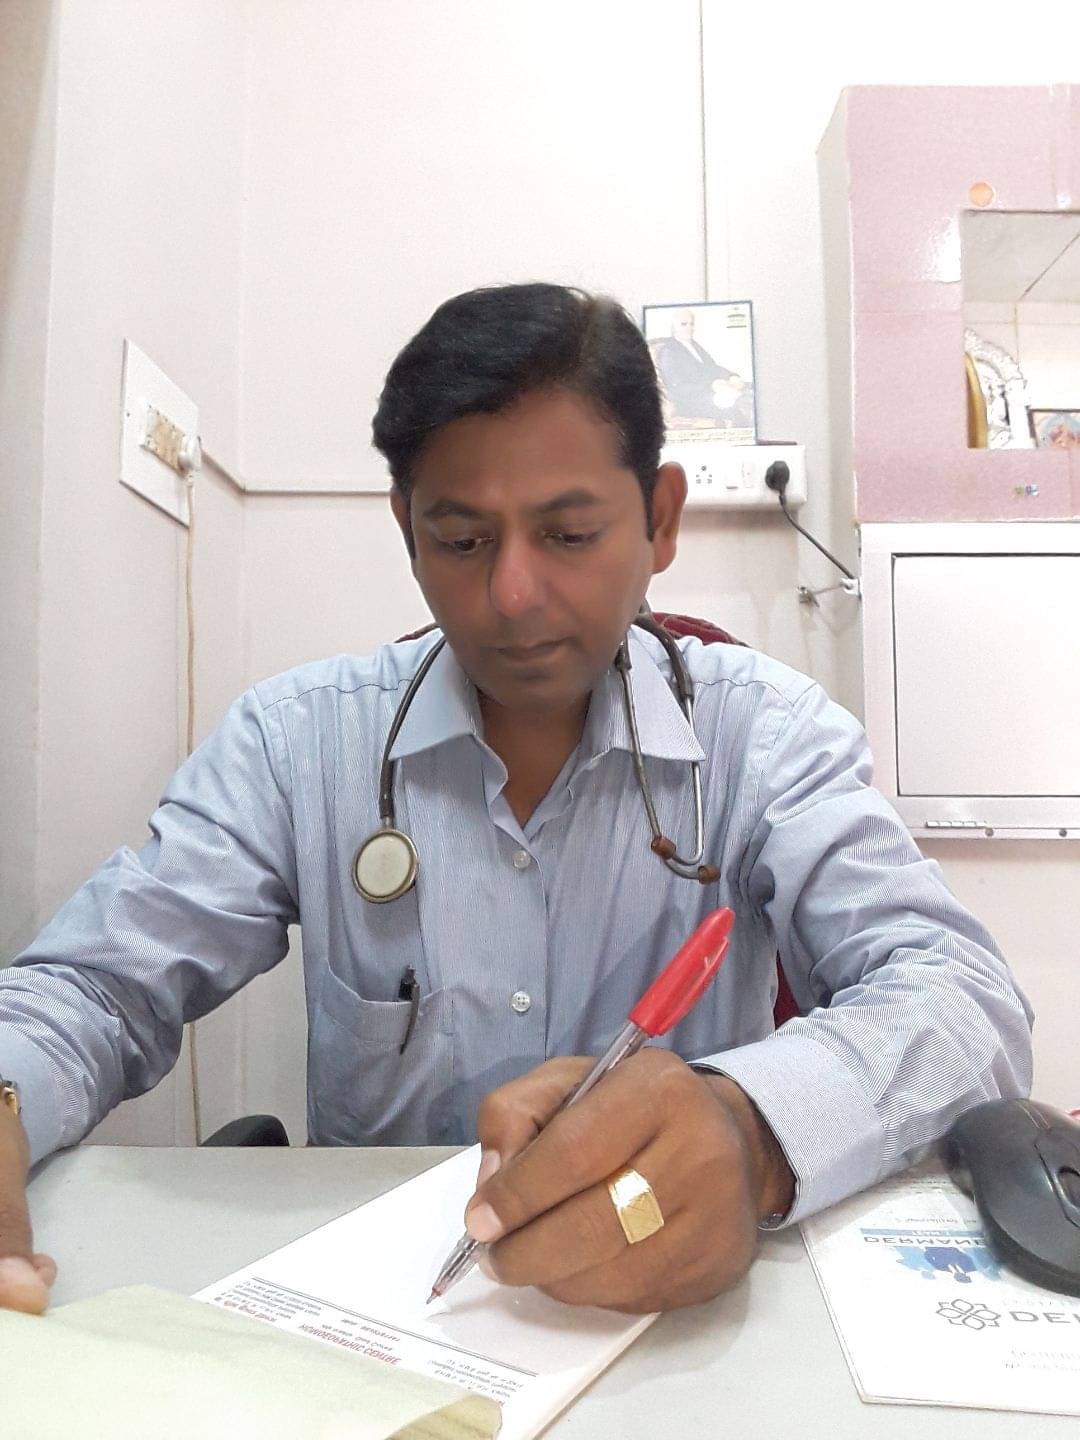 Best Skin Doctor Dermatologist Hair Transplant  Laser Hair Removal in  Kanpur  Dermatrichs Clinic Kanpur